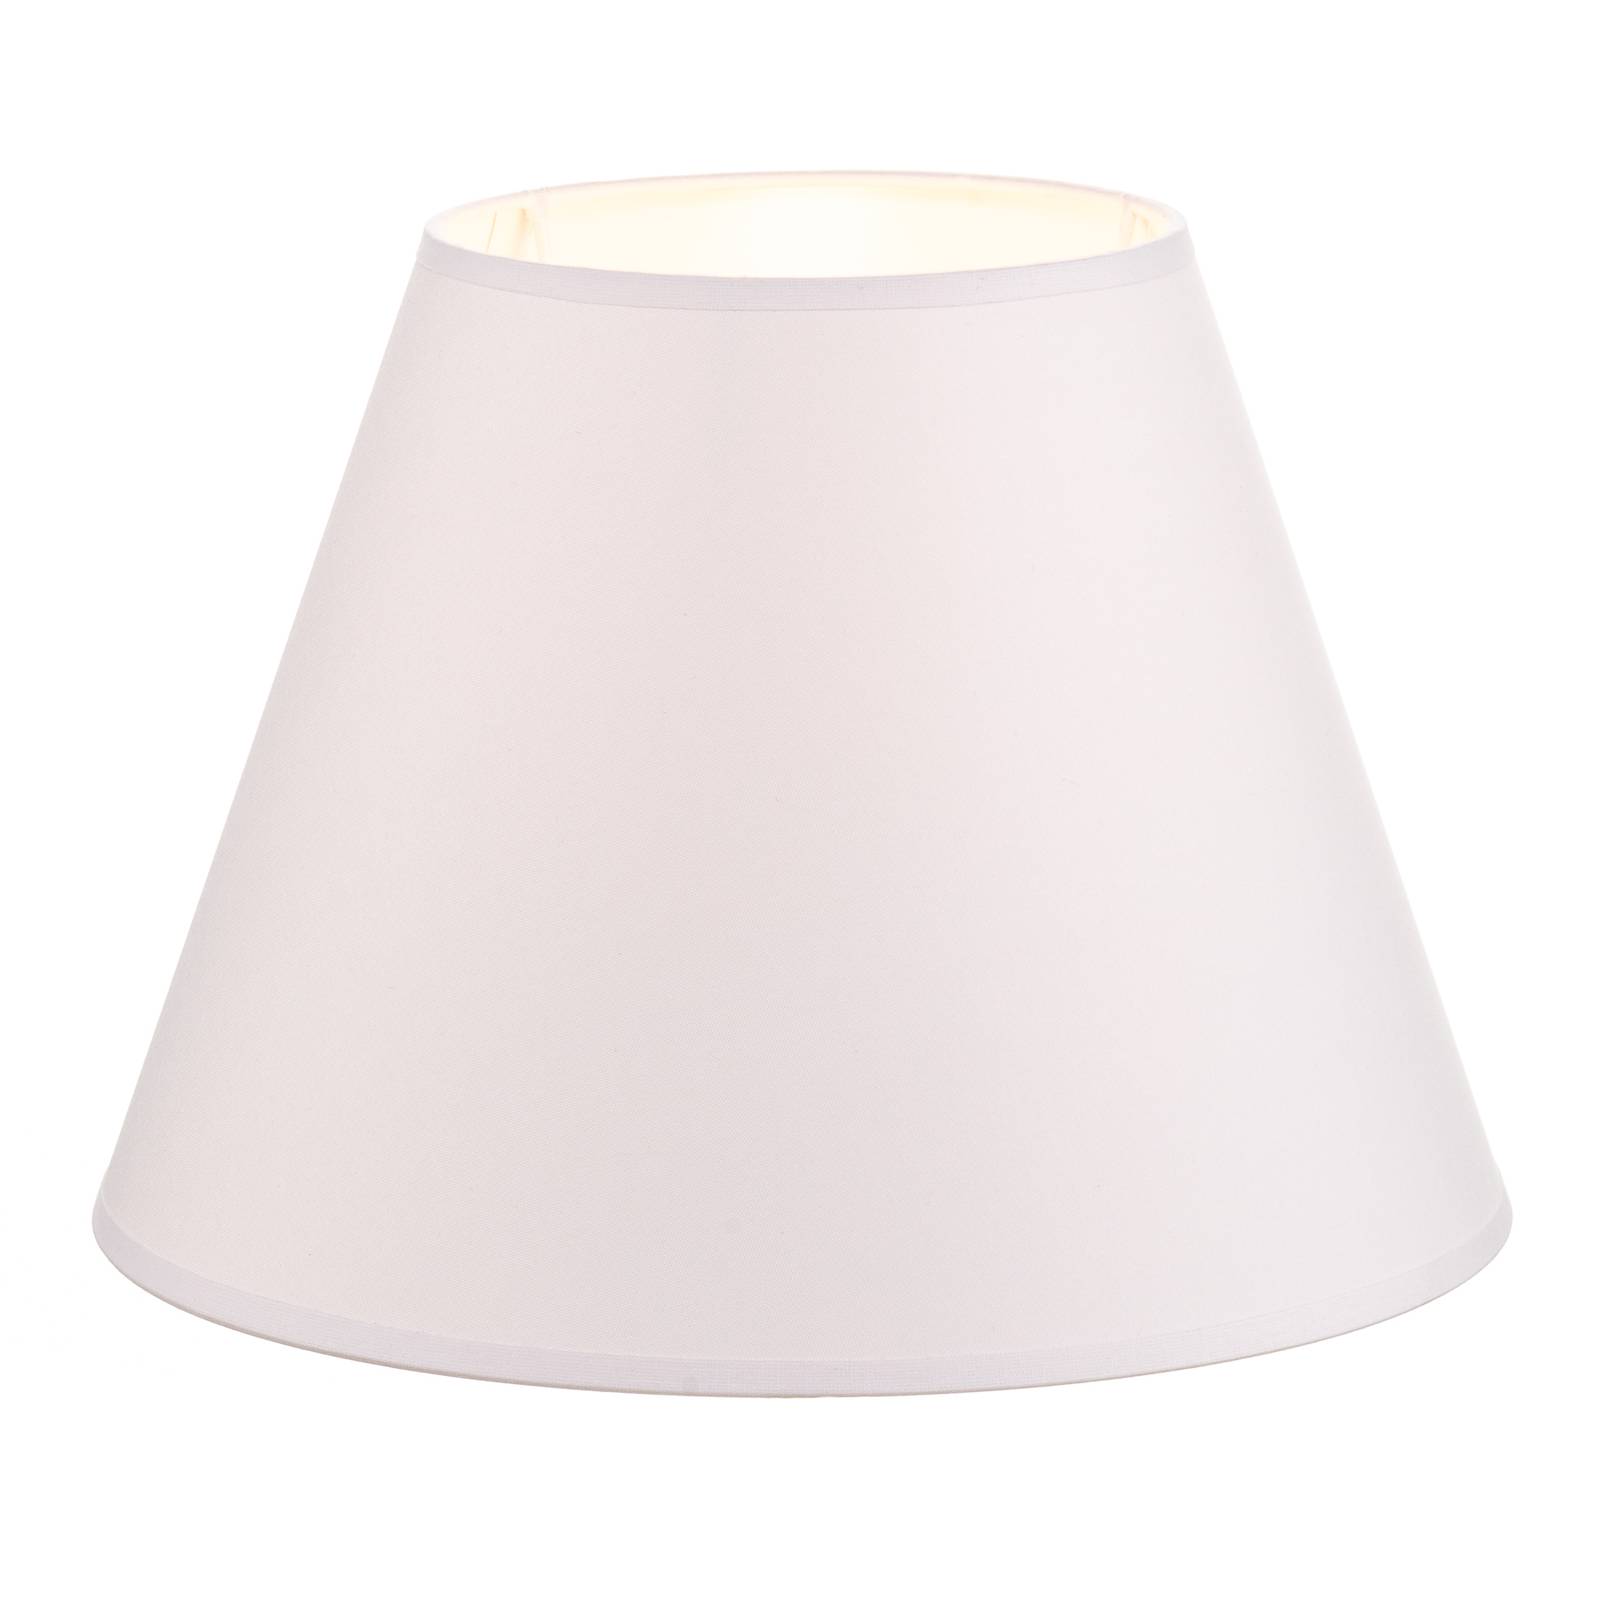 Sofia lámpaernyő 21 cm magas, fehér